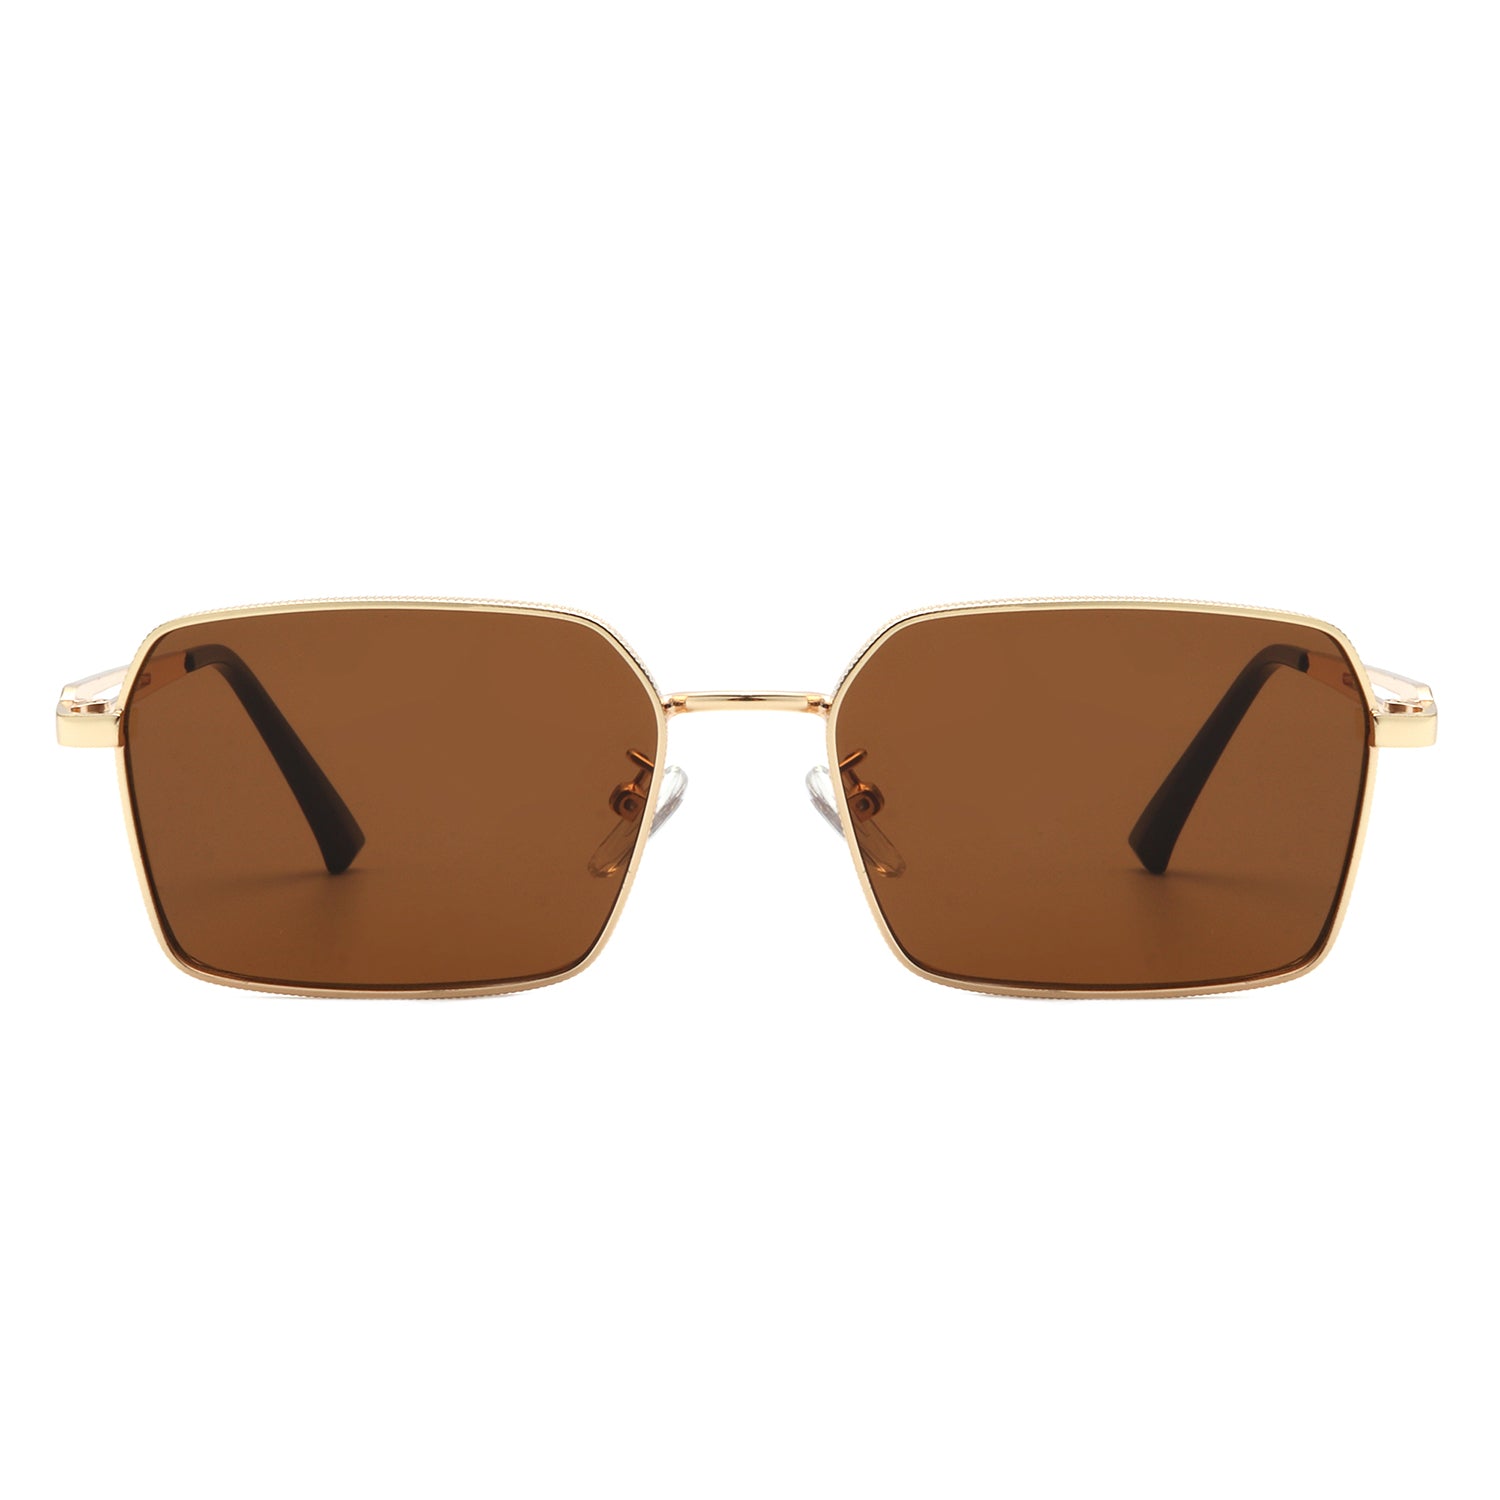 HJ2059 - Square Retro Tinted Fashion Flat Top Wholesale Sunglasses